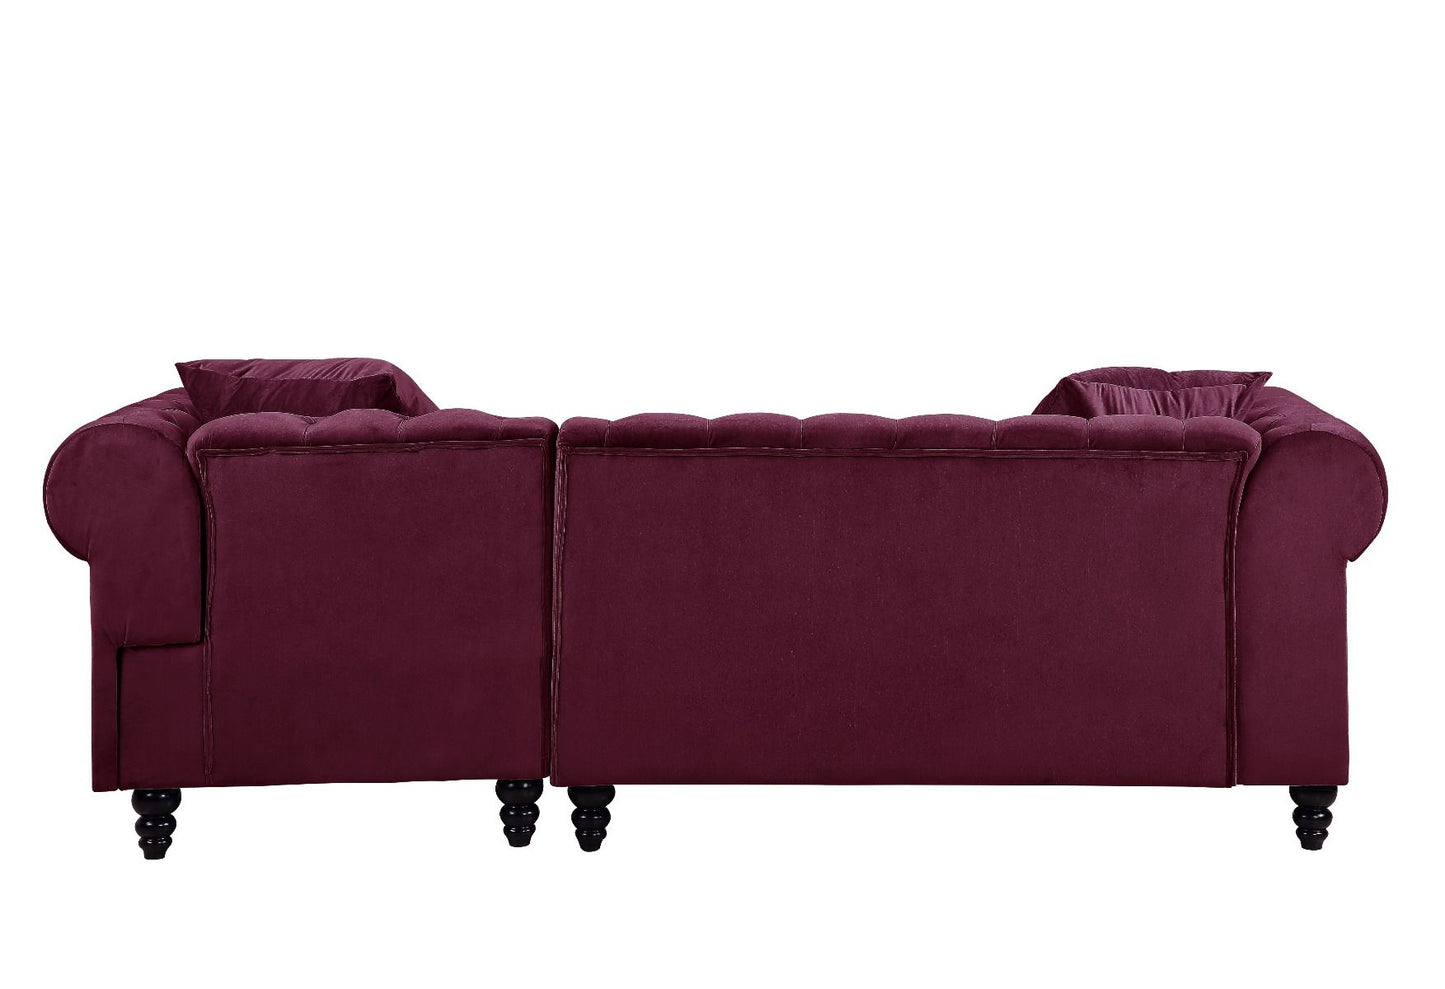 Adnelis 57315 Velvet Sectional Sofa by Acme